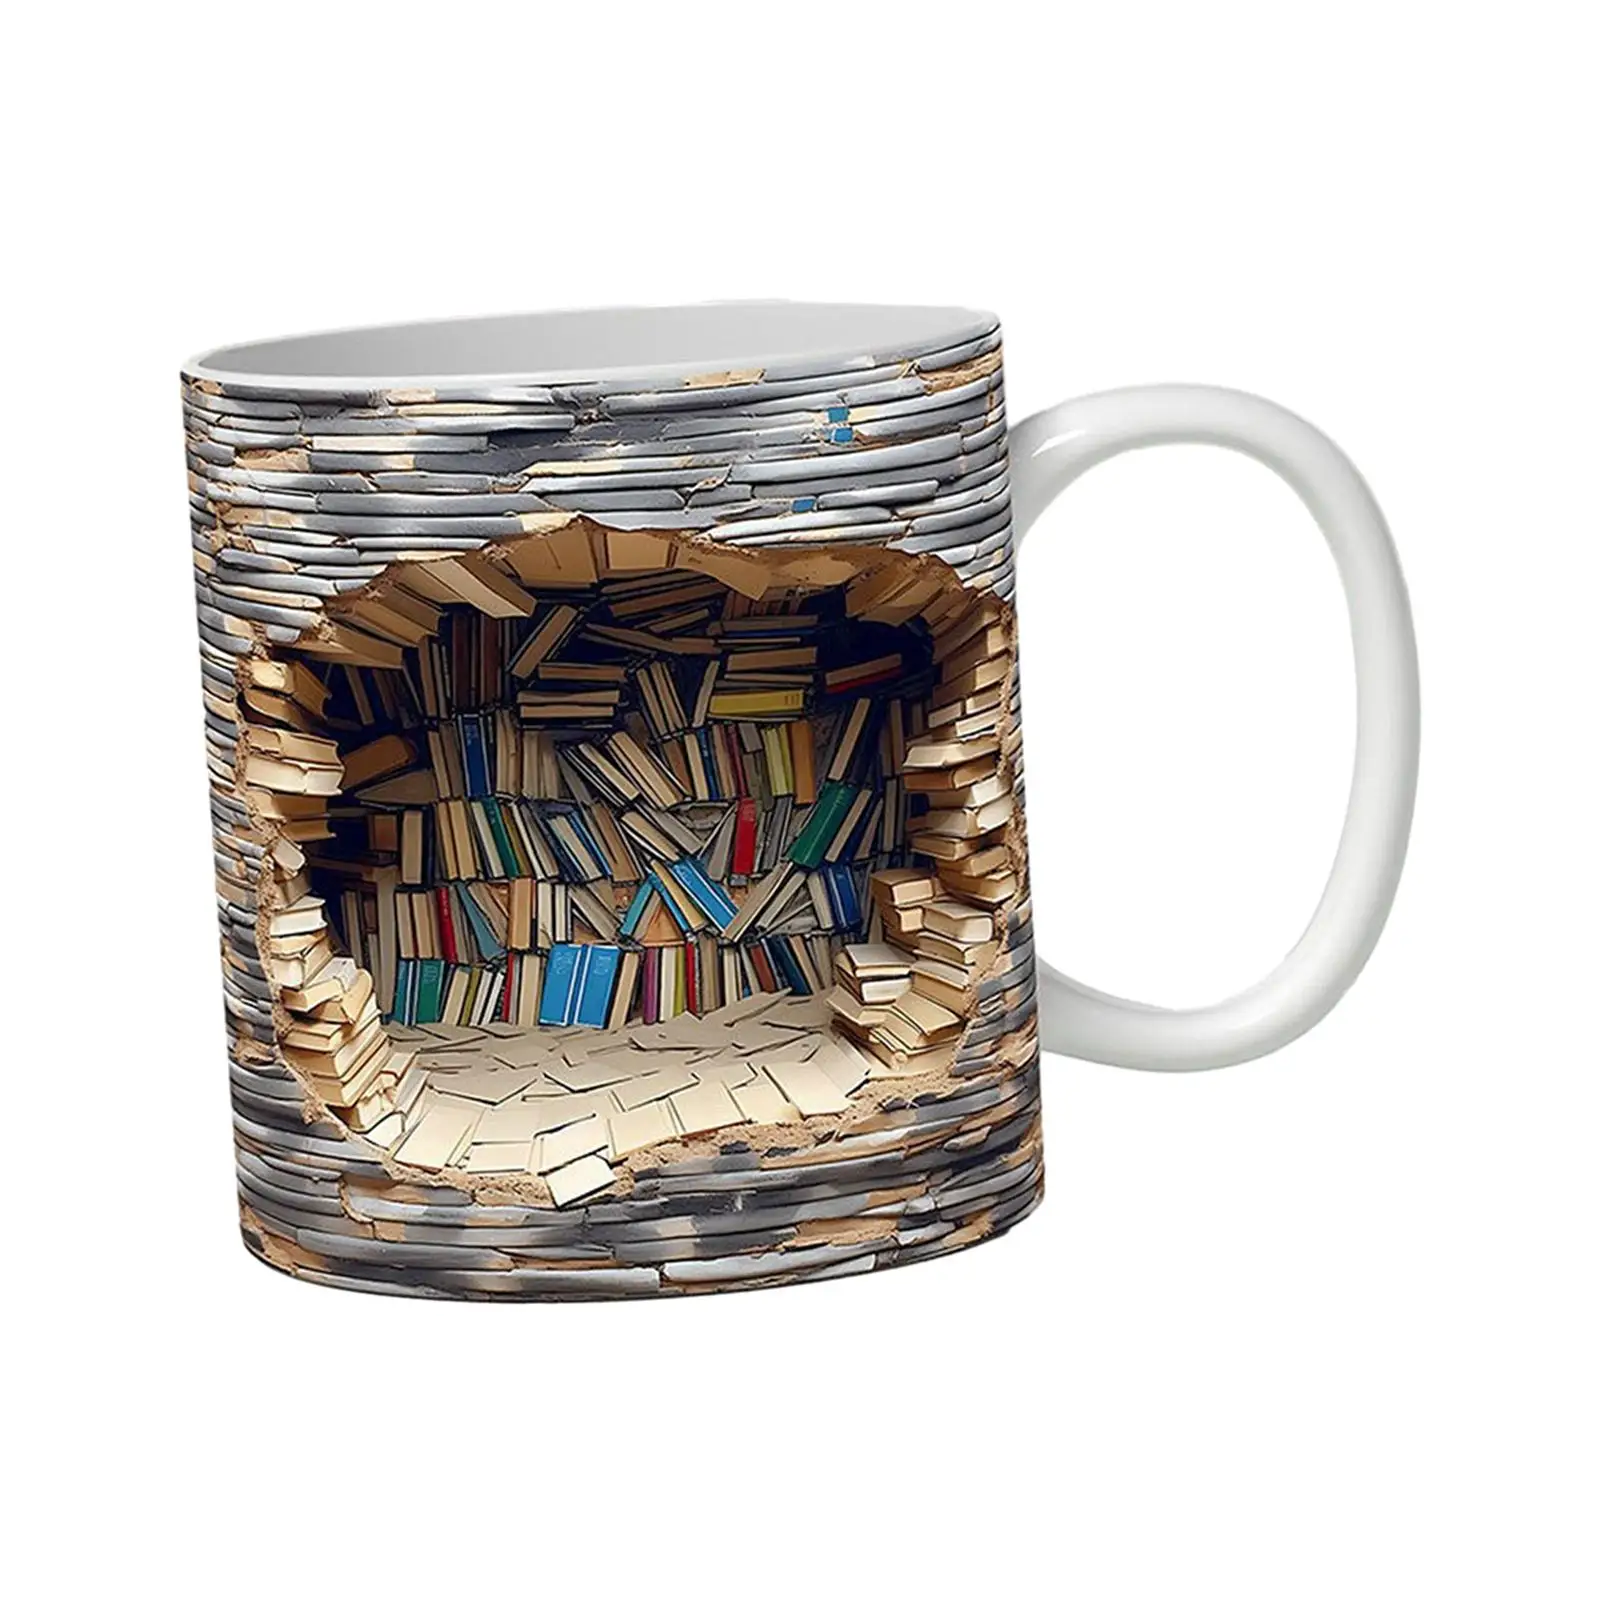 Bookworm Coffee Mug 3D Bookshelf Mug Handmade Pottery Mug Tea Cup Gift for Readers Book Lovers Coffee Mug Book Club Drinking Cup